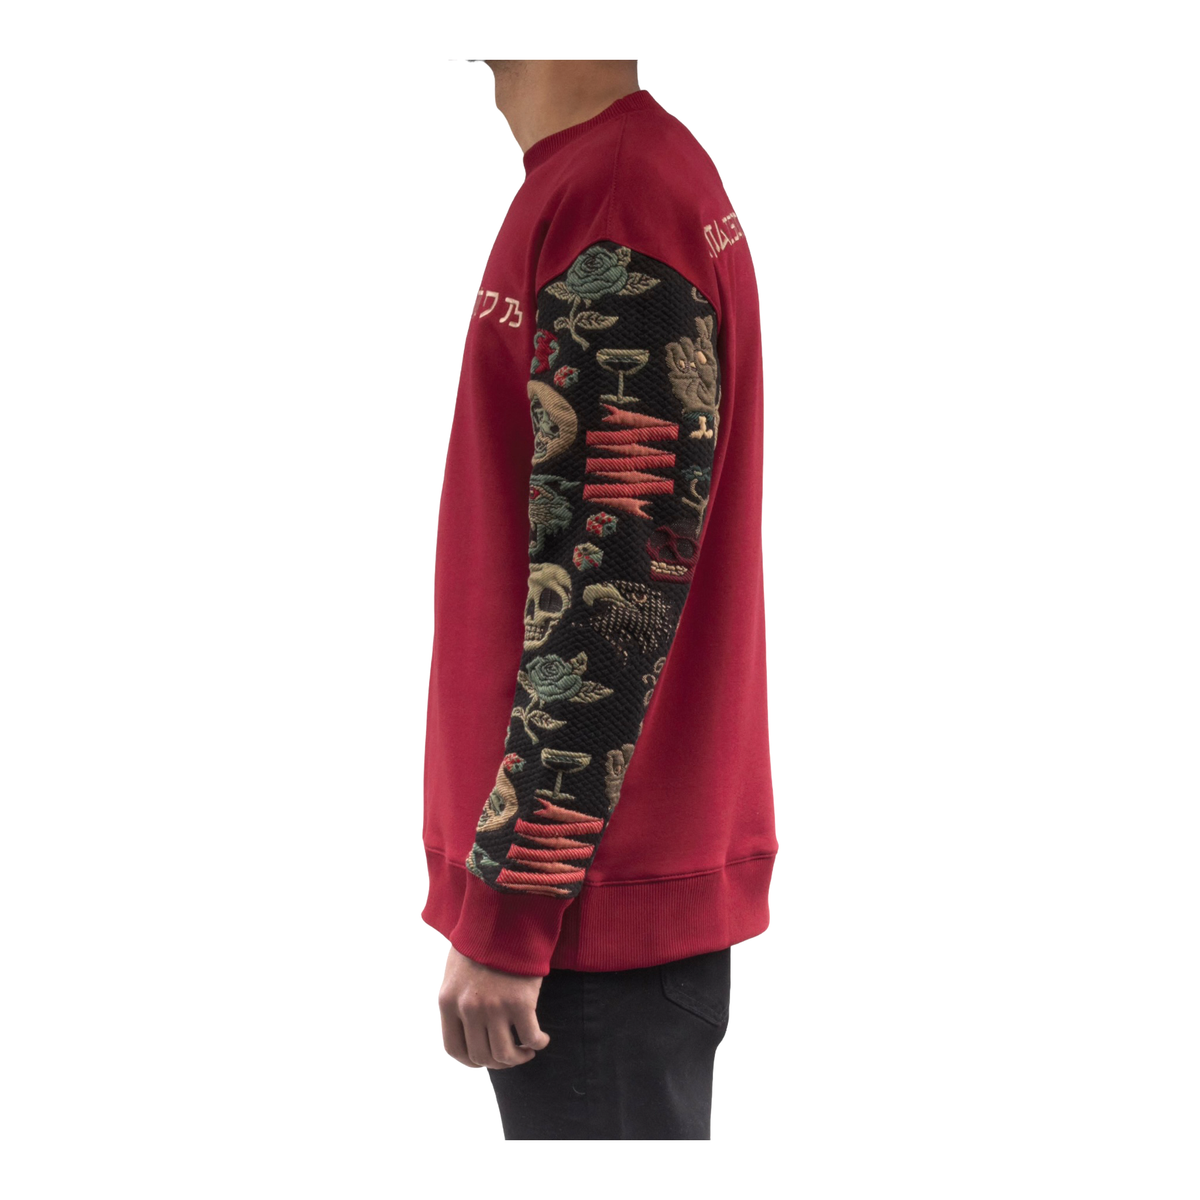 MDB Couture Gallery Threads Crew Neck Sweatshirt - Black Theme